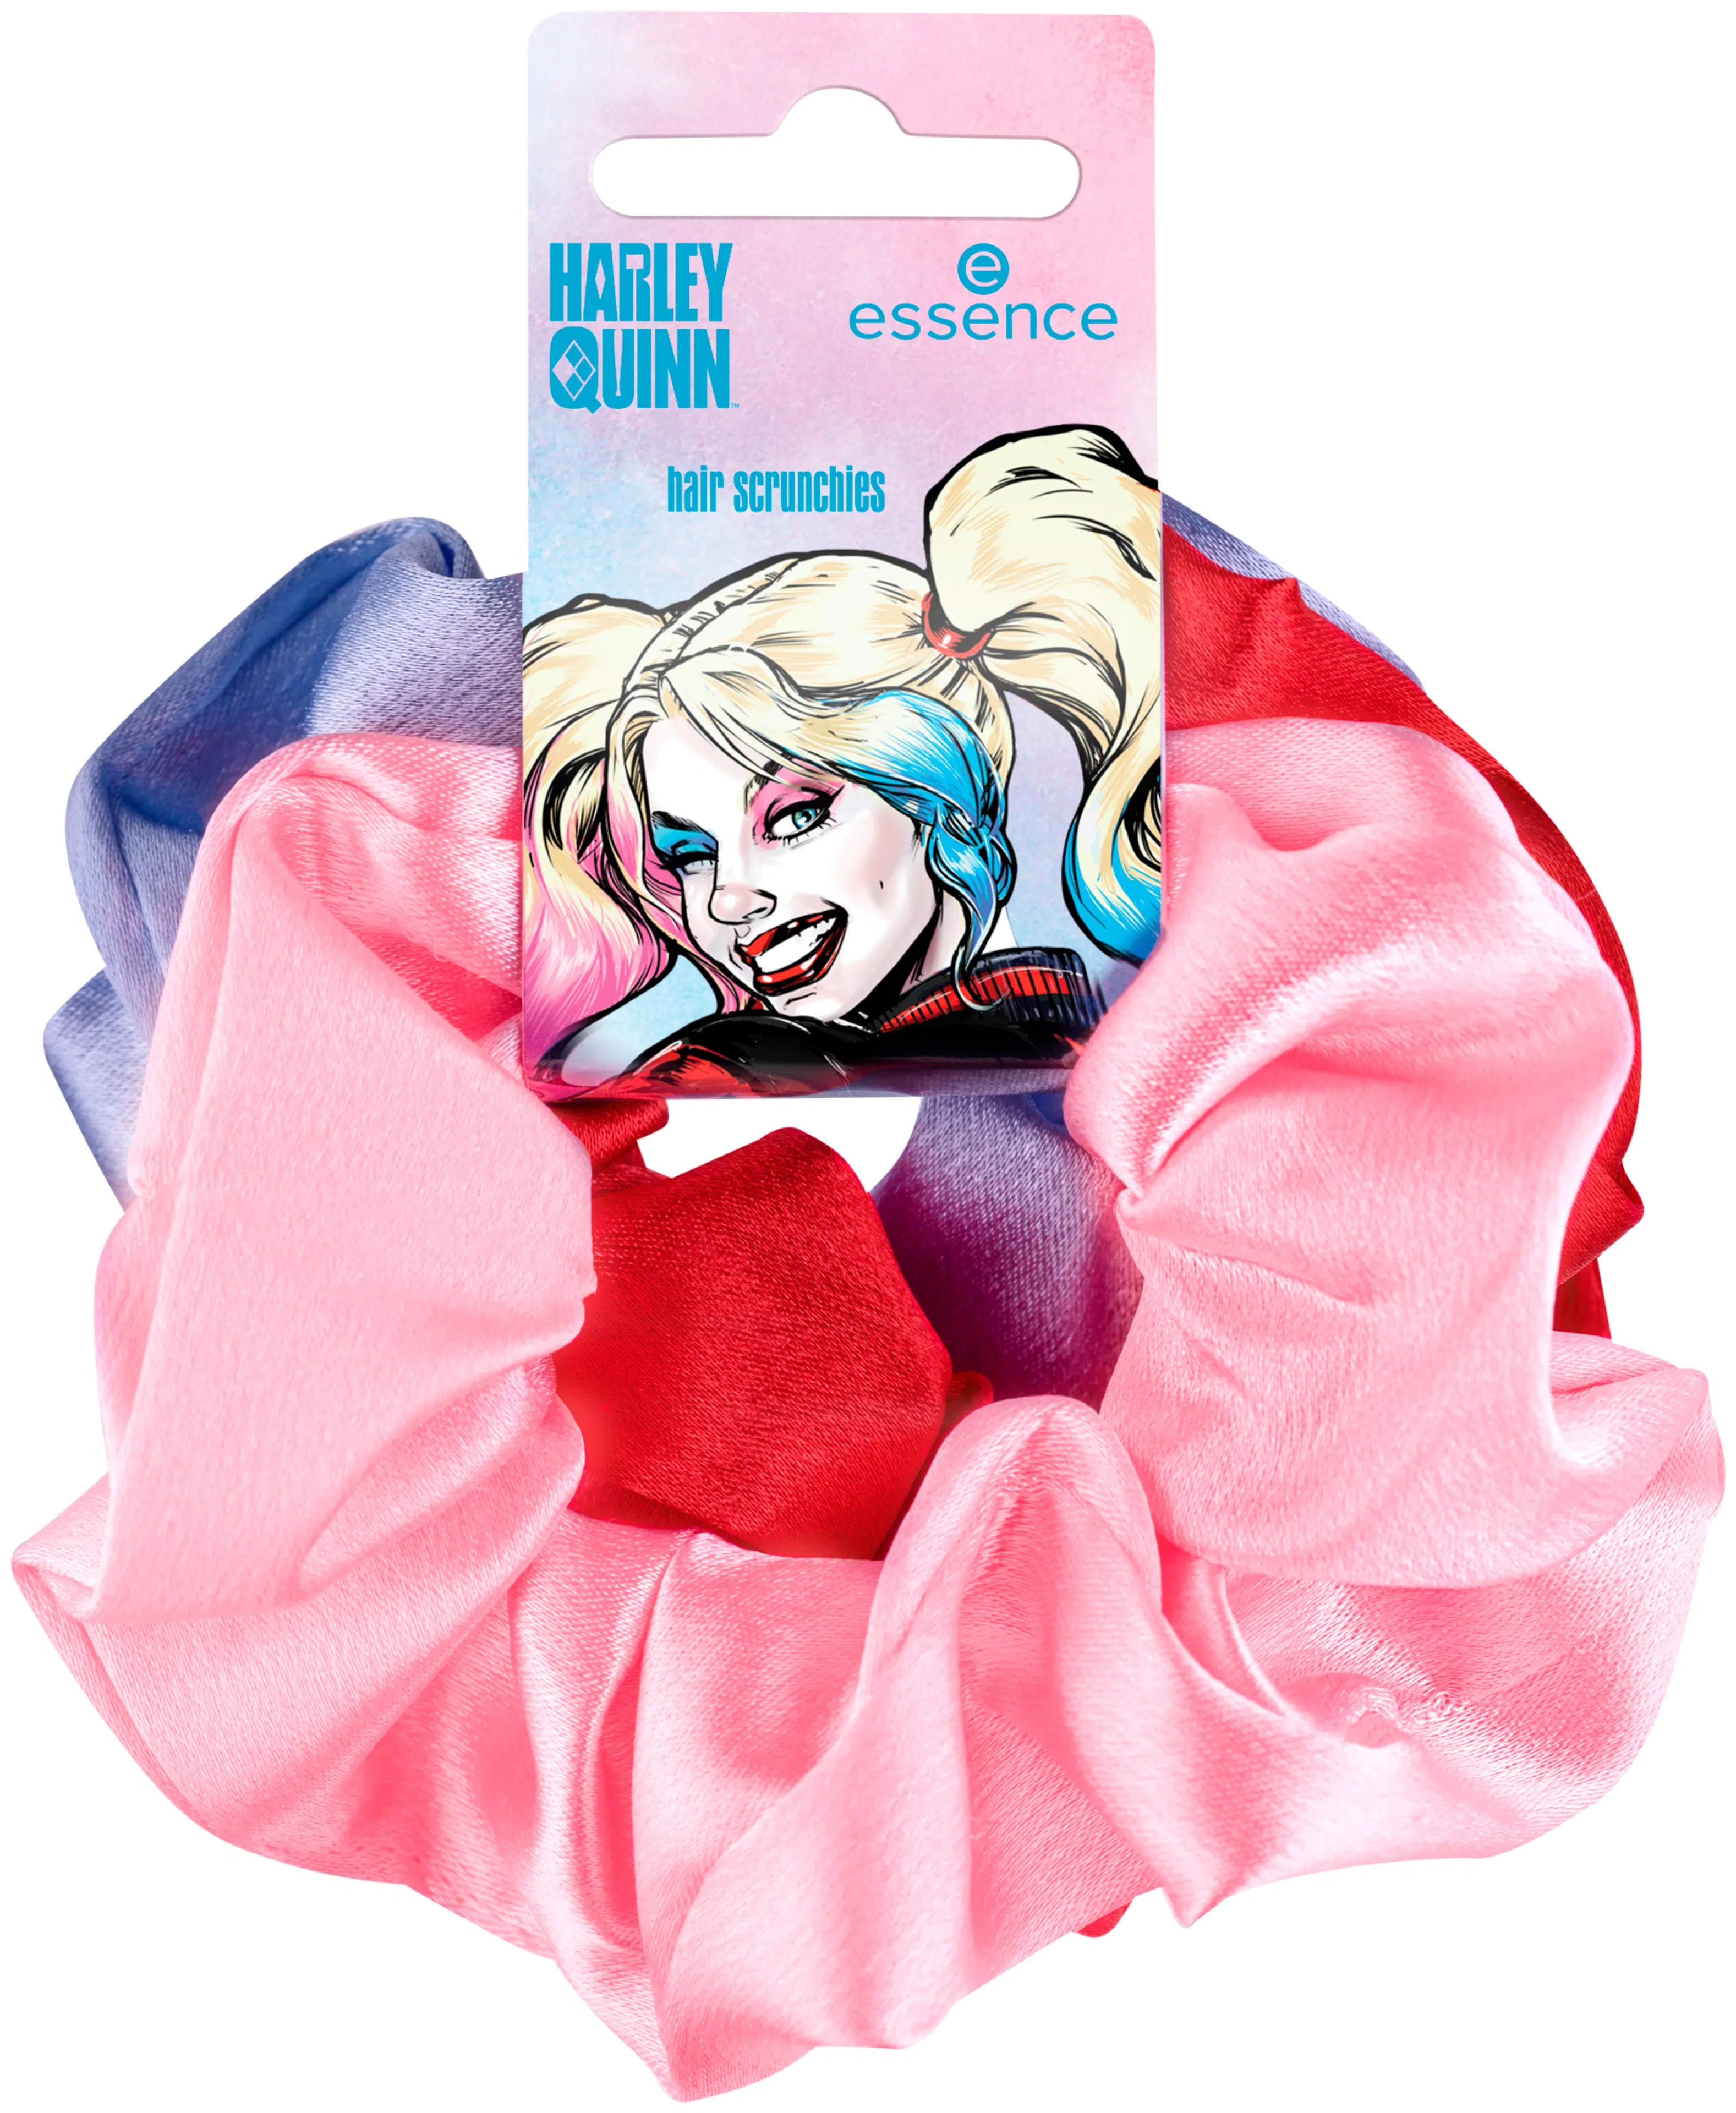 essence Harley Quinn scrunchies